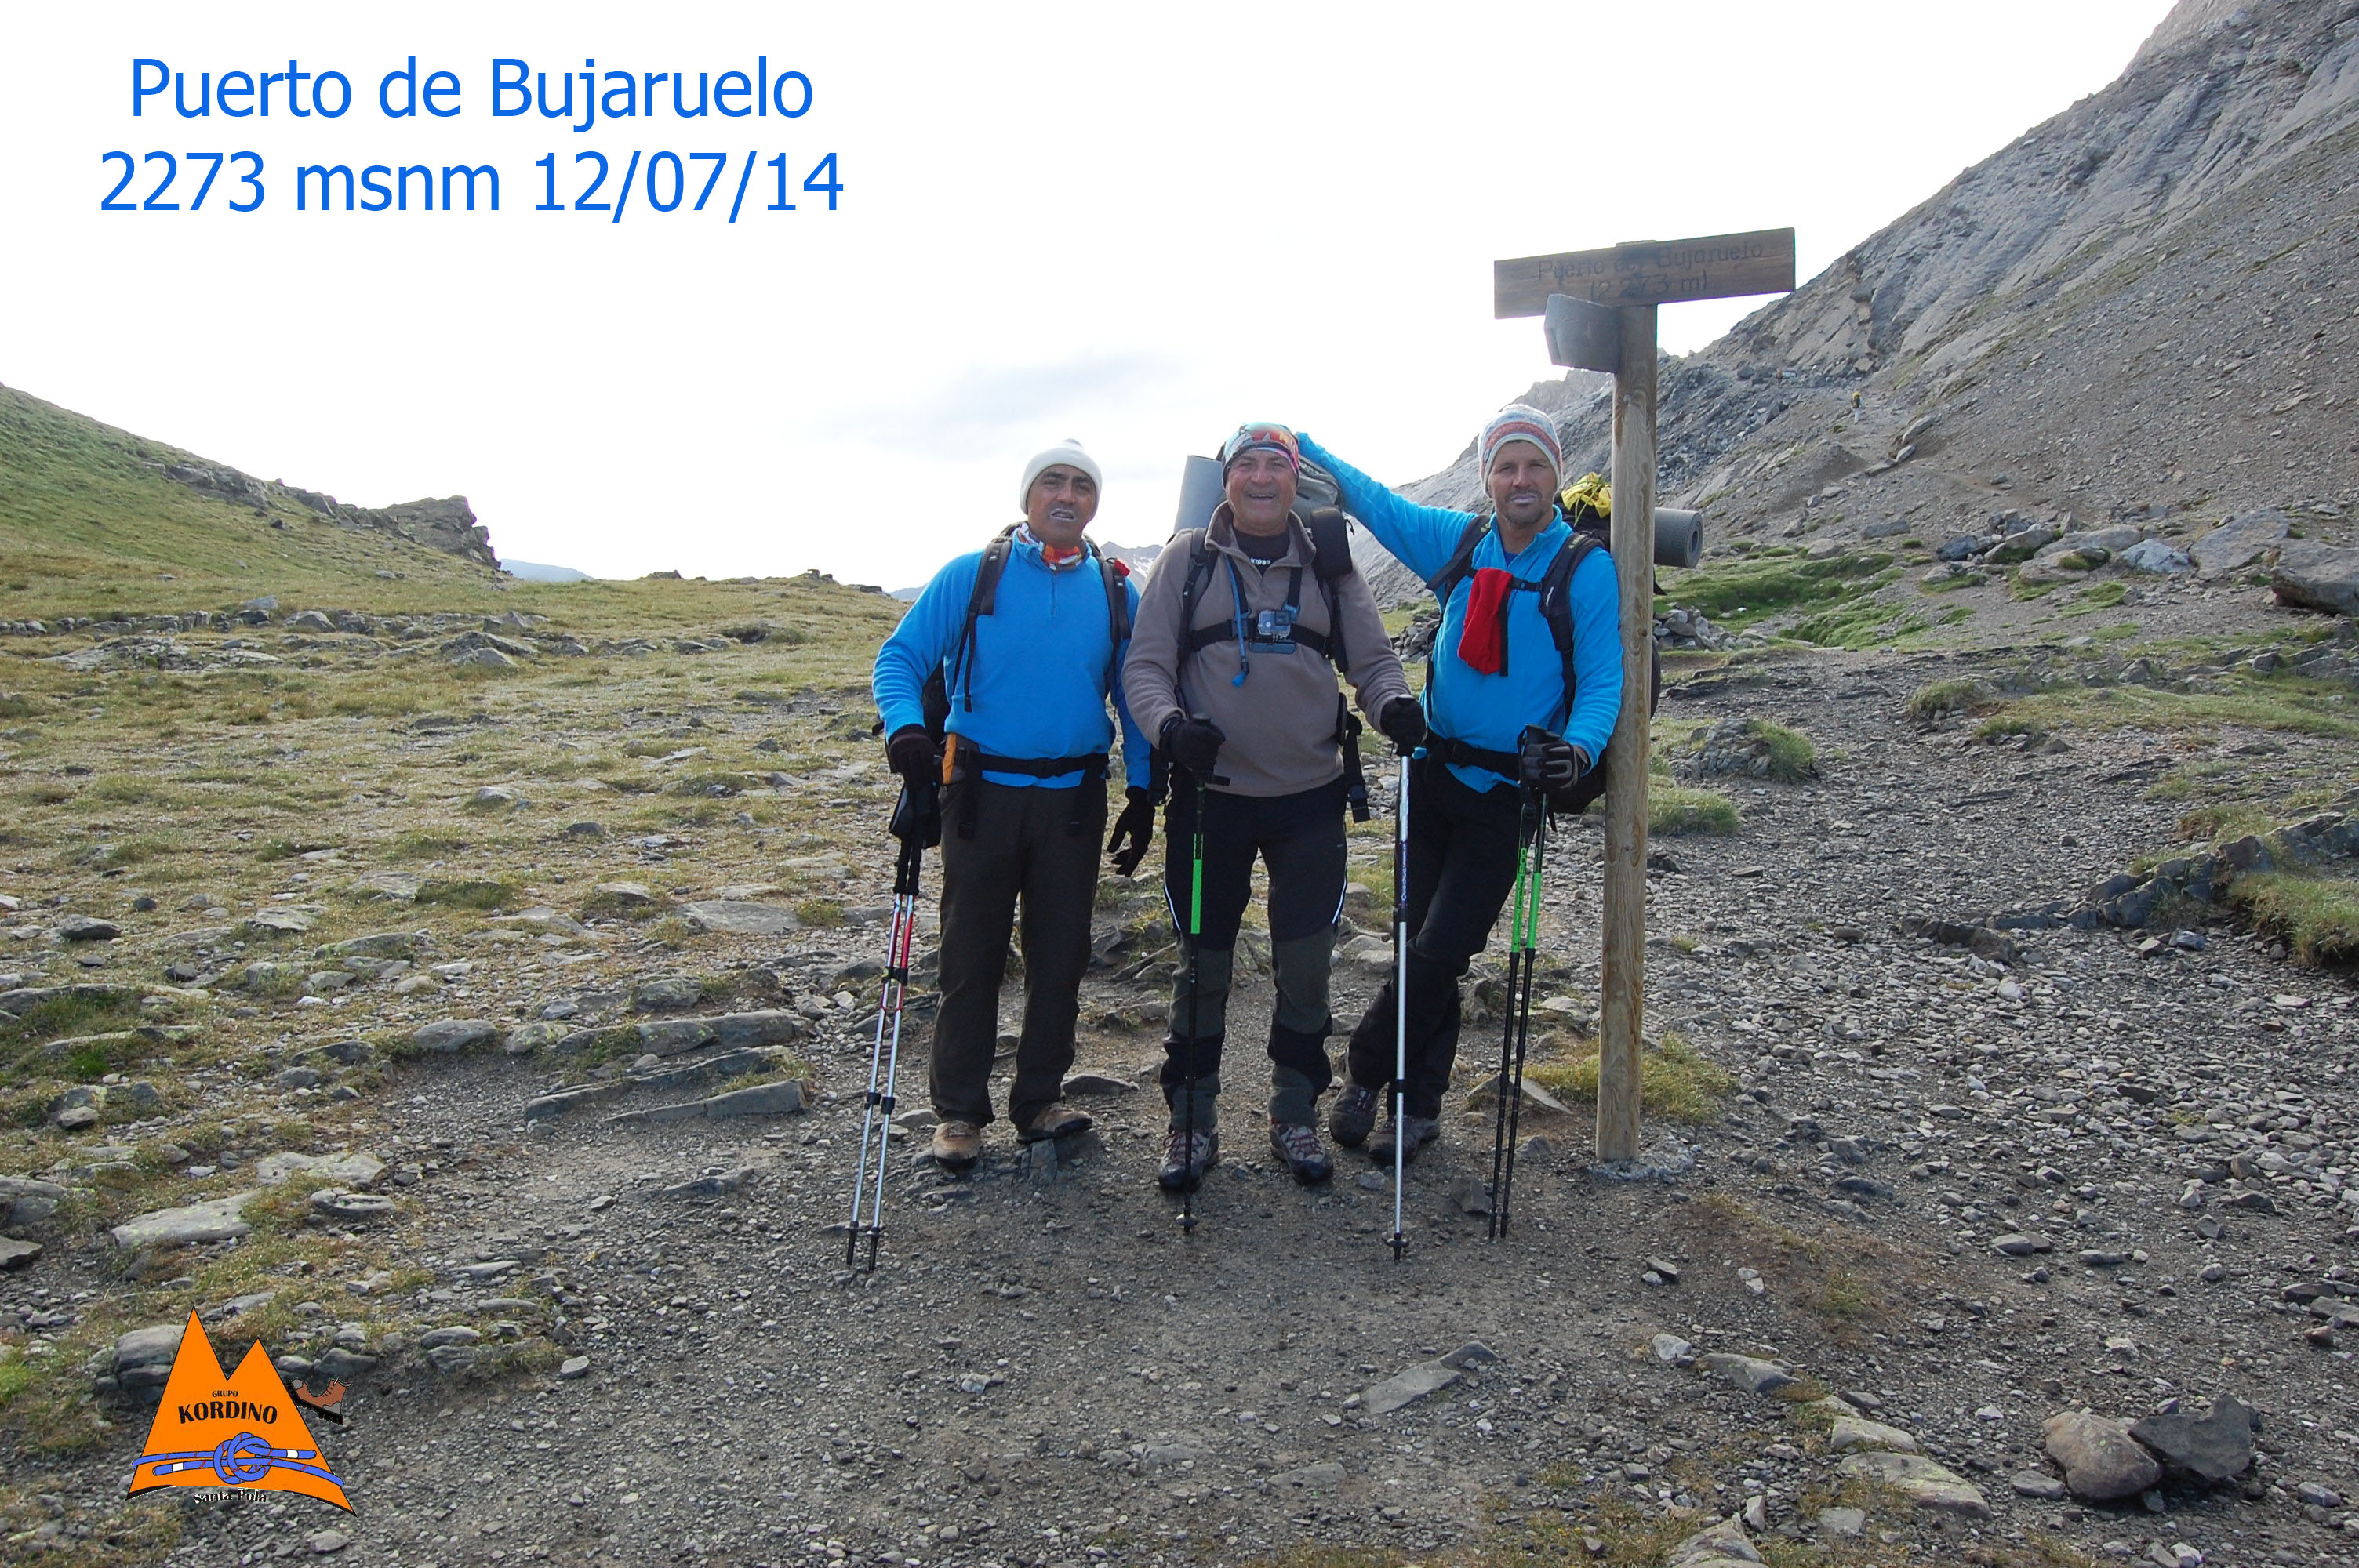 Bujaruelo 2273 msnm copia